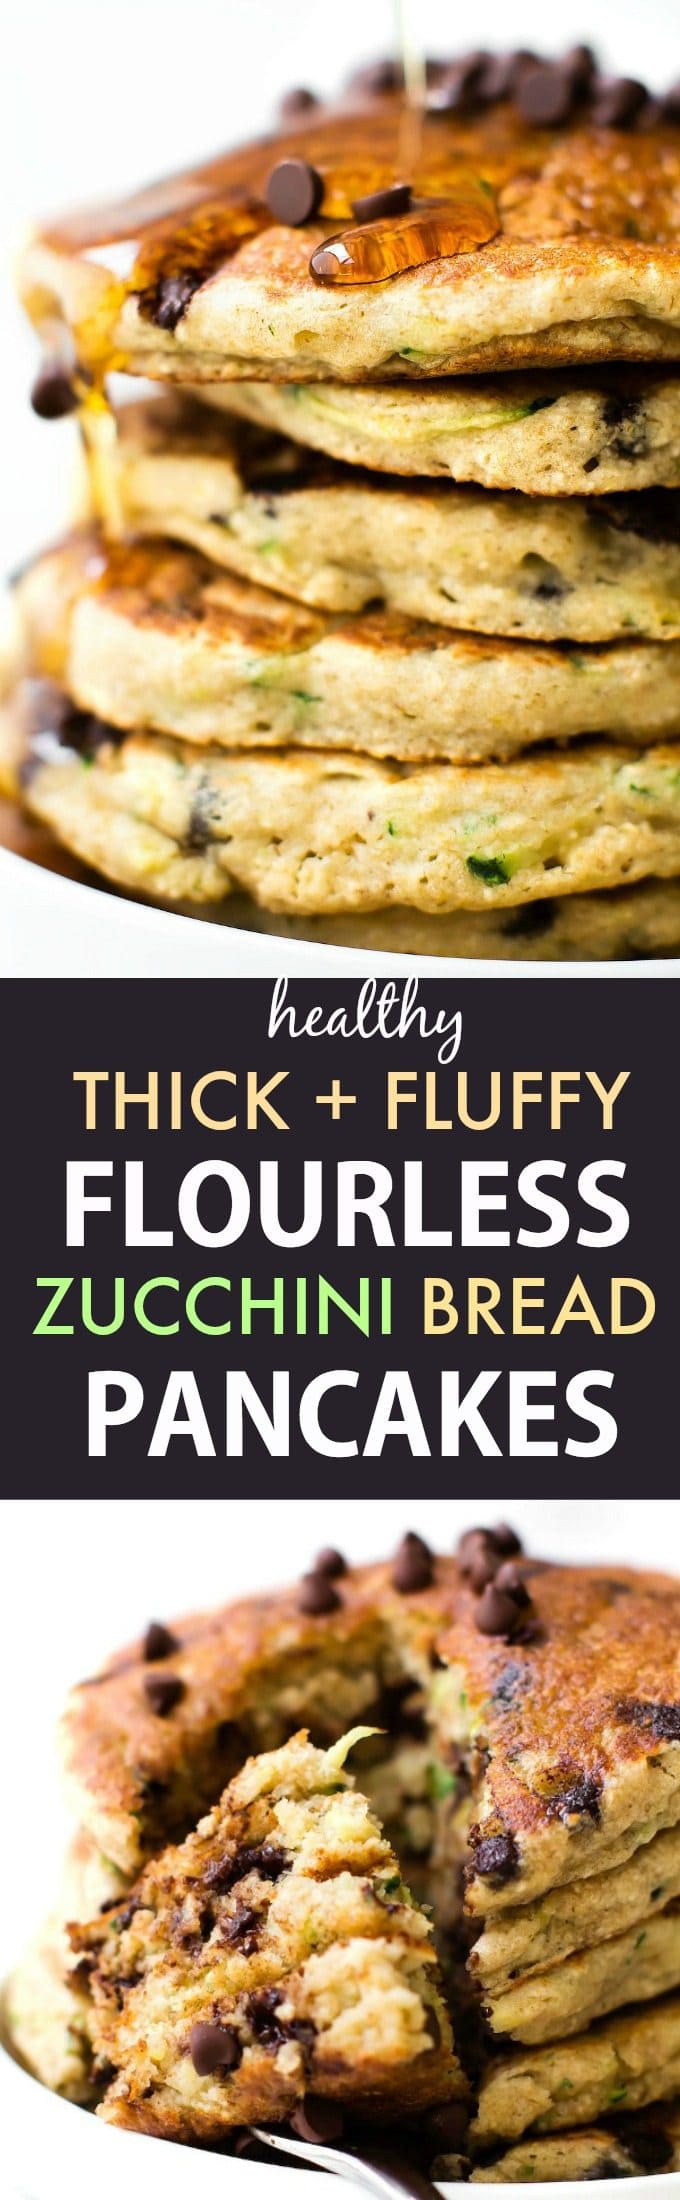 Fluffy Flourless Zucchini Bread Pancakes (V, GF, Sugar Free)- Thick & Fluffy Blender Flourless Zucchini Bread pancakes recipe made with no eggs and no flour! {vegan, gluten free, sugar free}- thebigmansworld.com